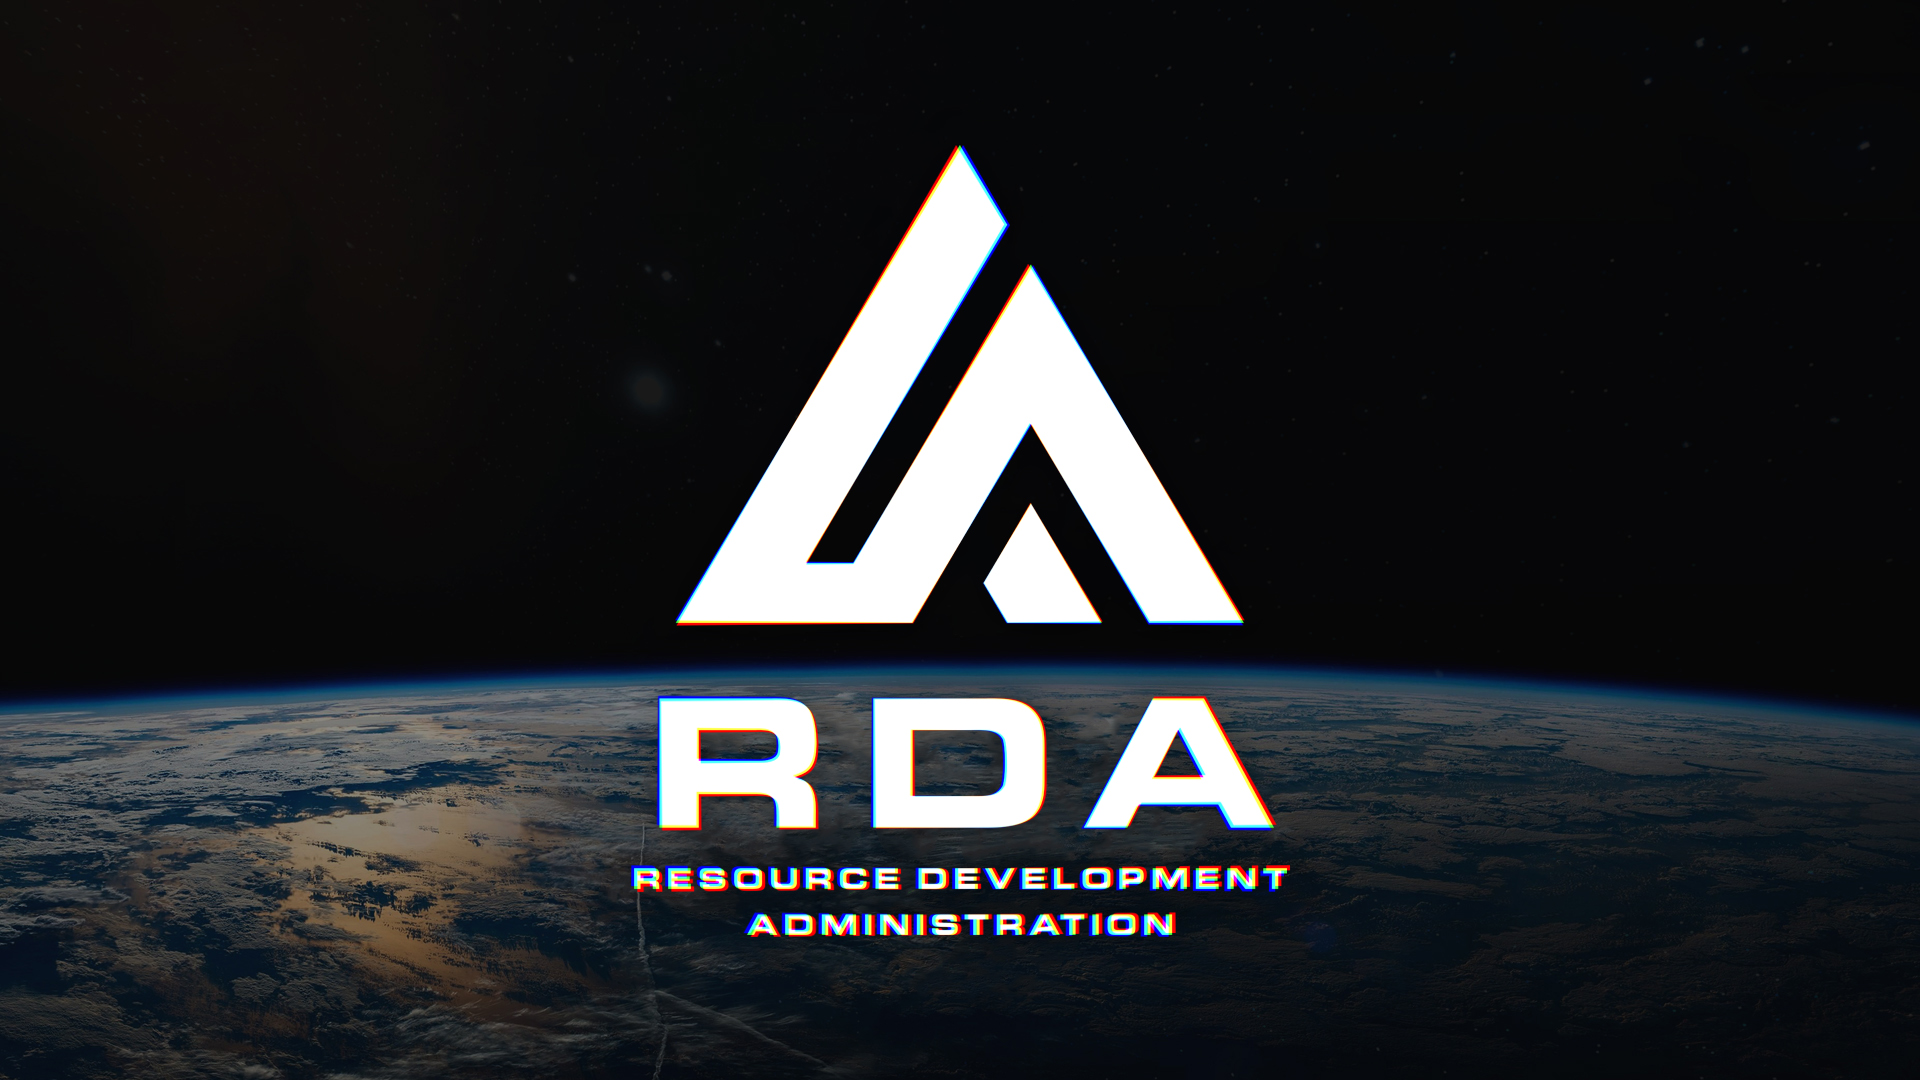 Free download Steam Workshop Resource Development Administration RDA [1920x1080] for your Desktop, Mobile & Tablet. Explore Rda Wallpaper. Rda Wallpaper